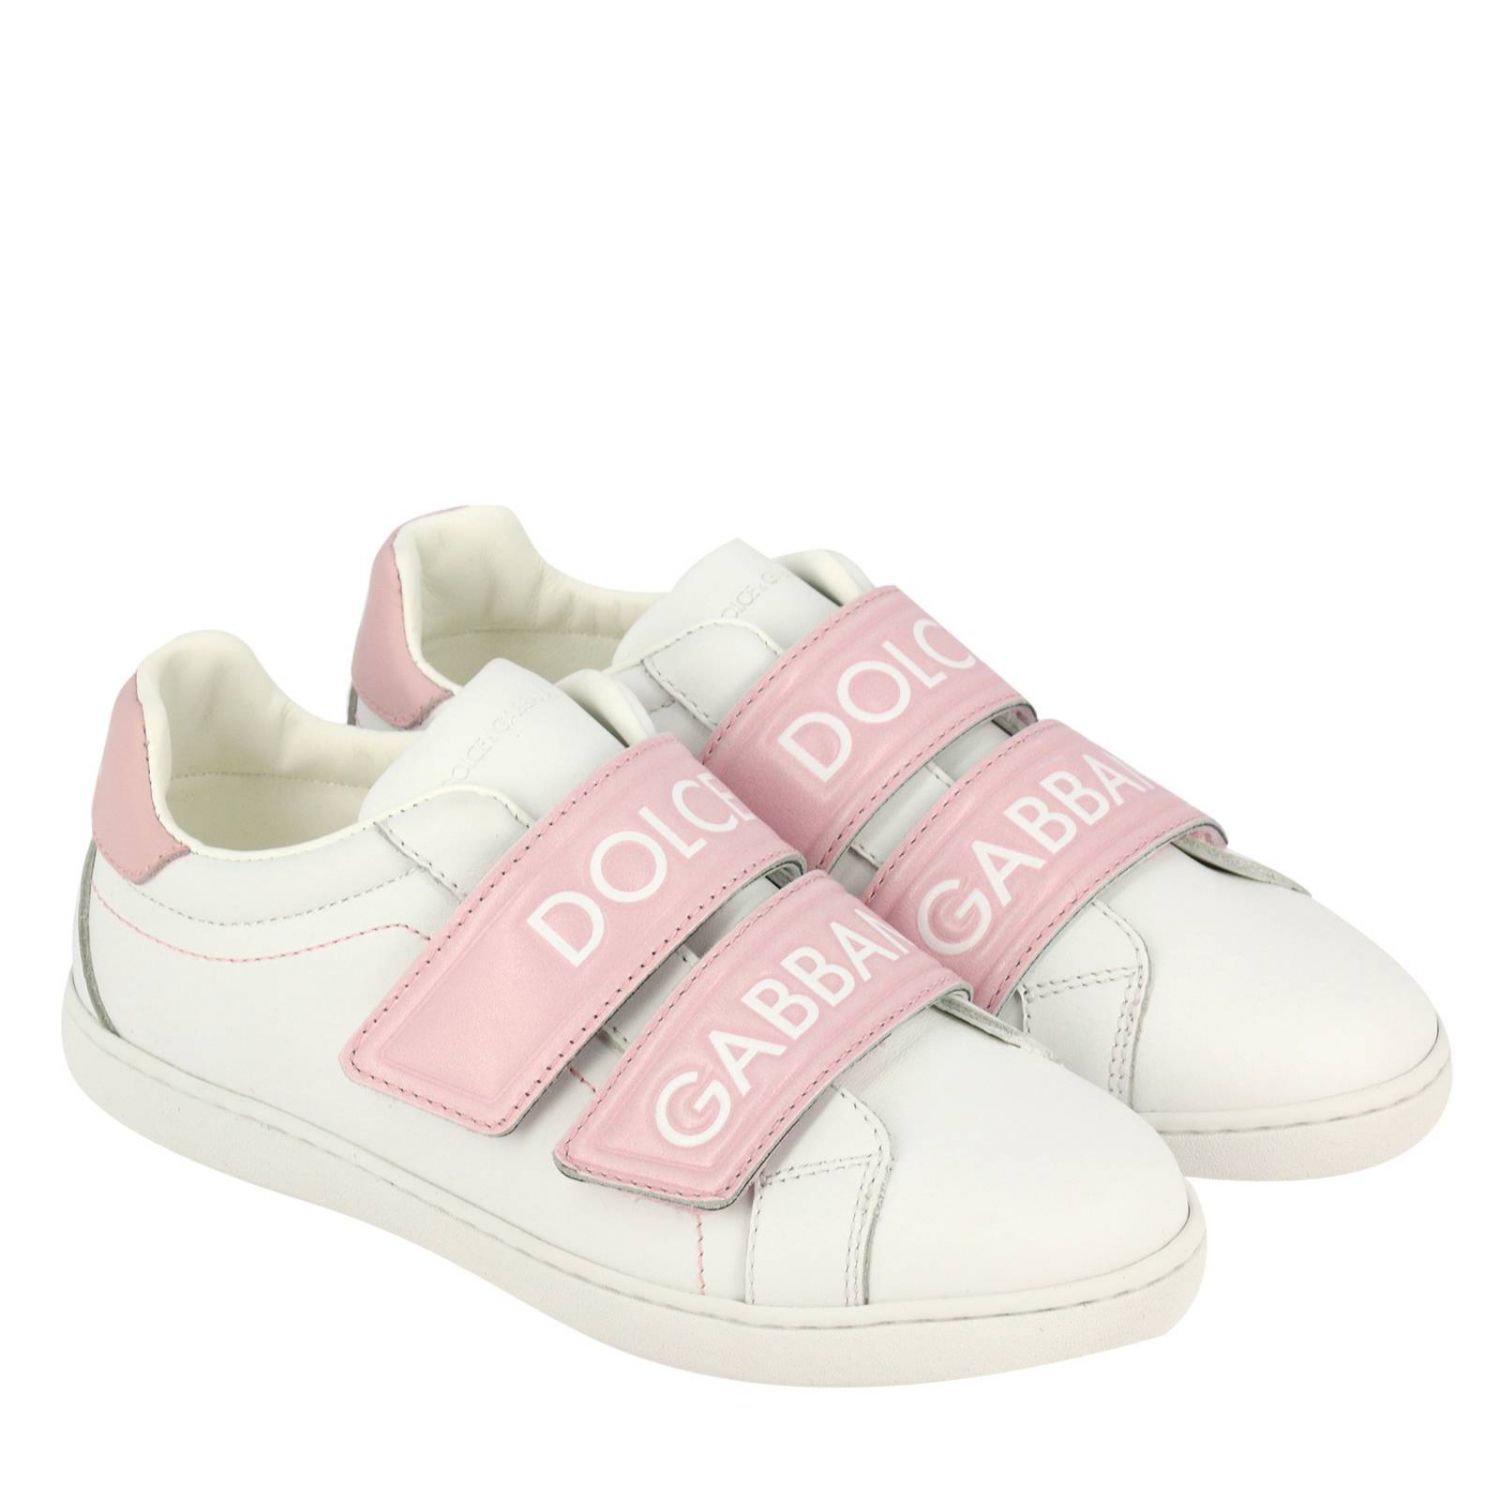 DOLCE & GABBANA: Shoes kids | Shoes Dolce & Gabbana Kids White | Shoes ...